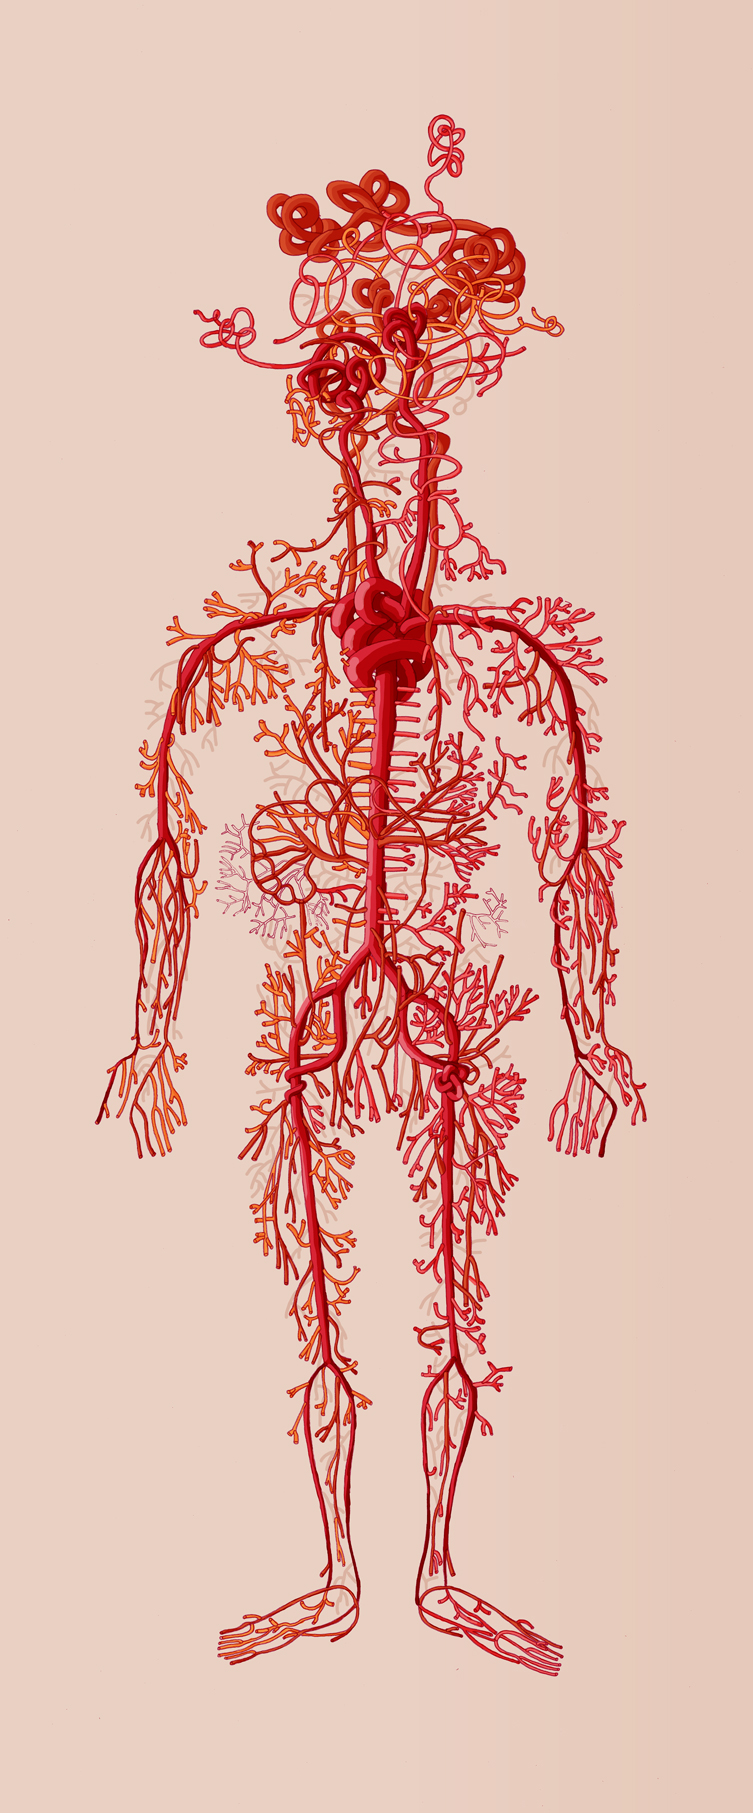 Nervous System biology science human Fruit Human Body intricate